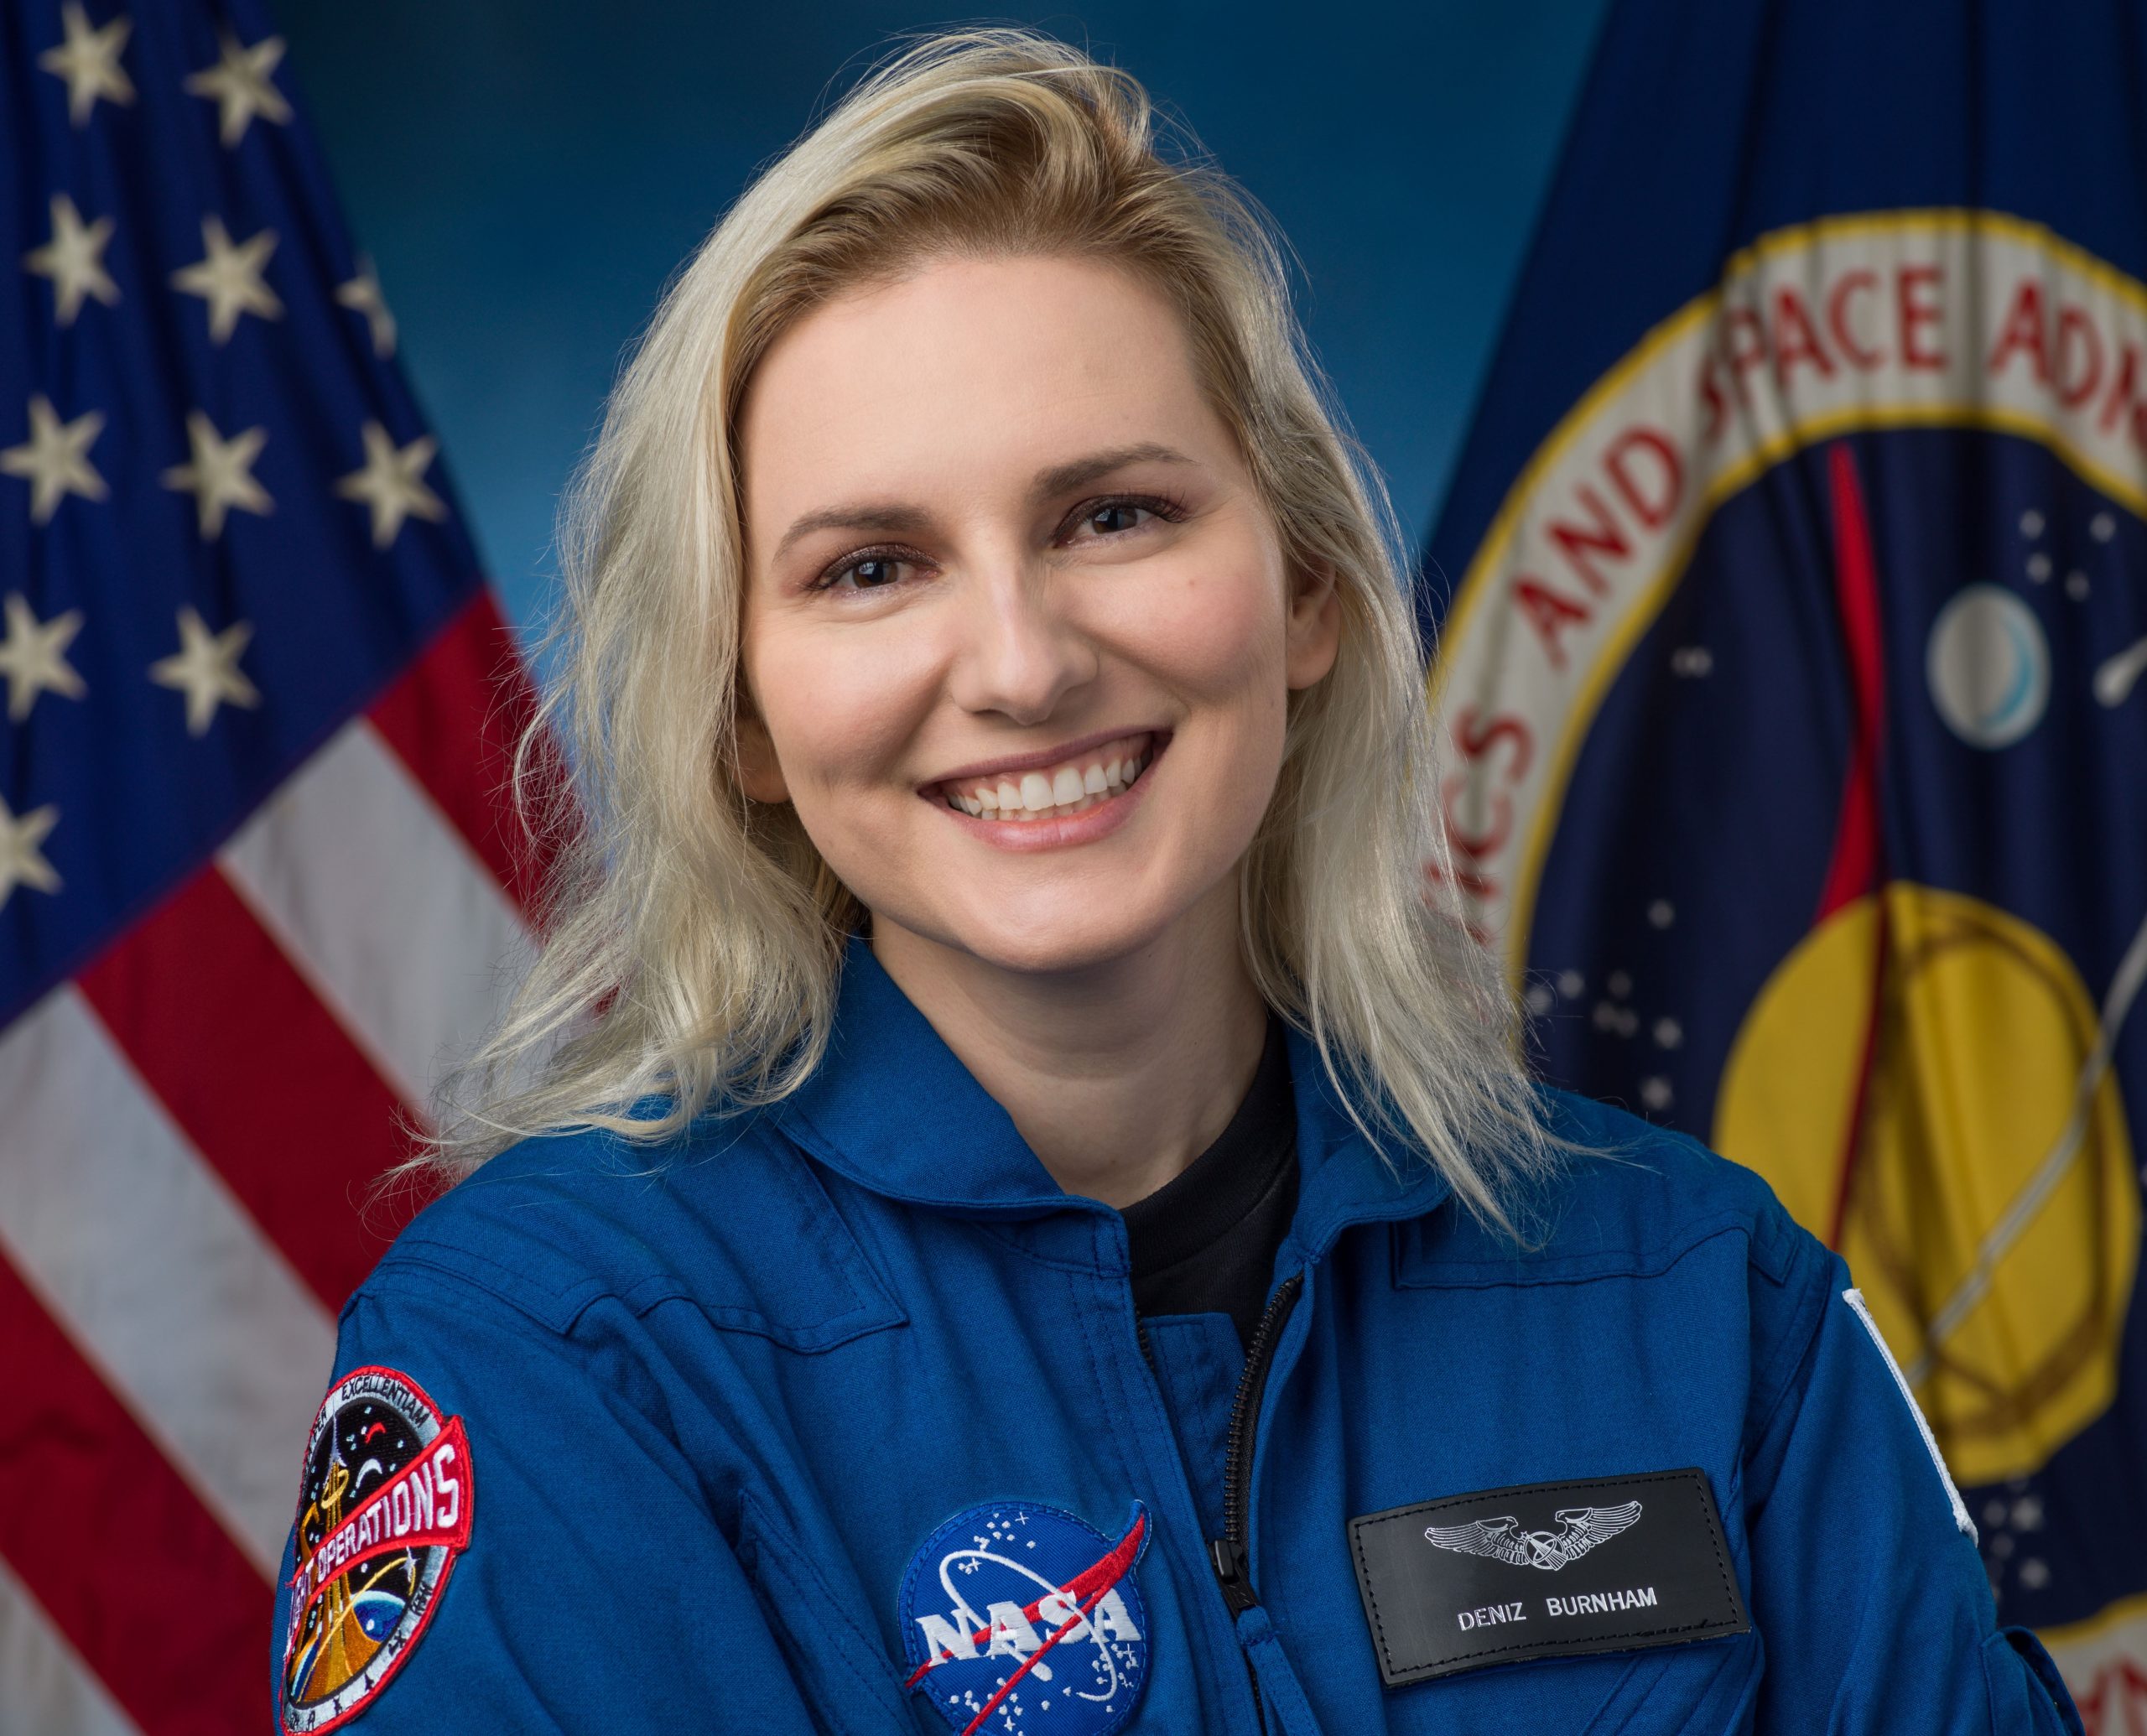 Turkish-born Deniz Burnham selected 2021 NASA astronaut candidate - IHA ...